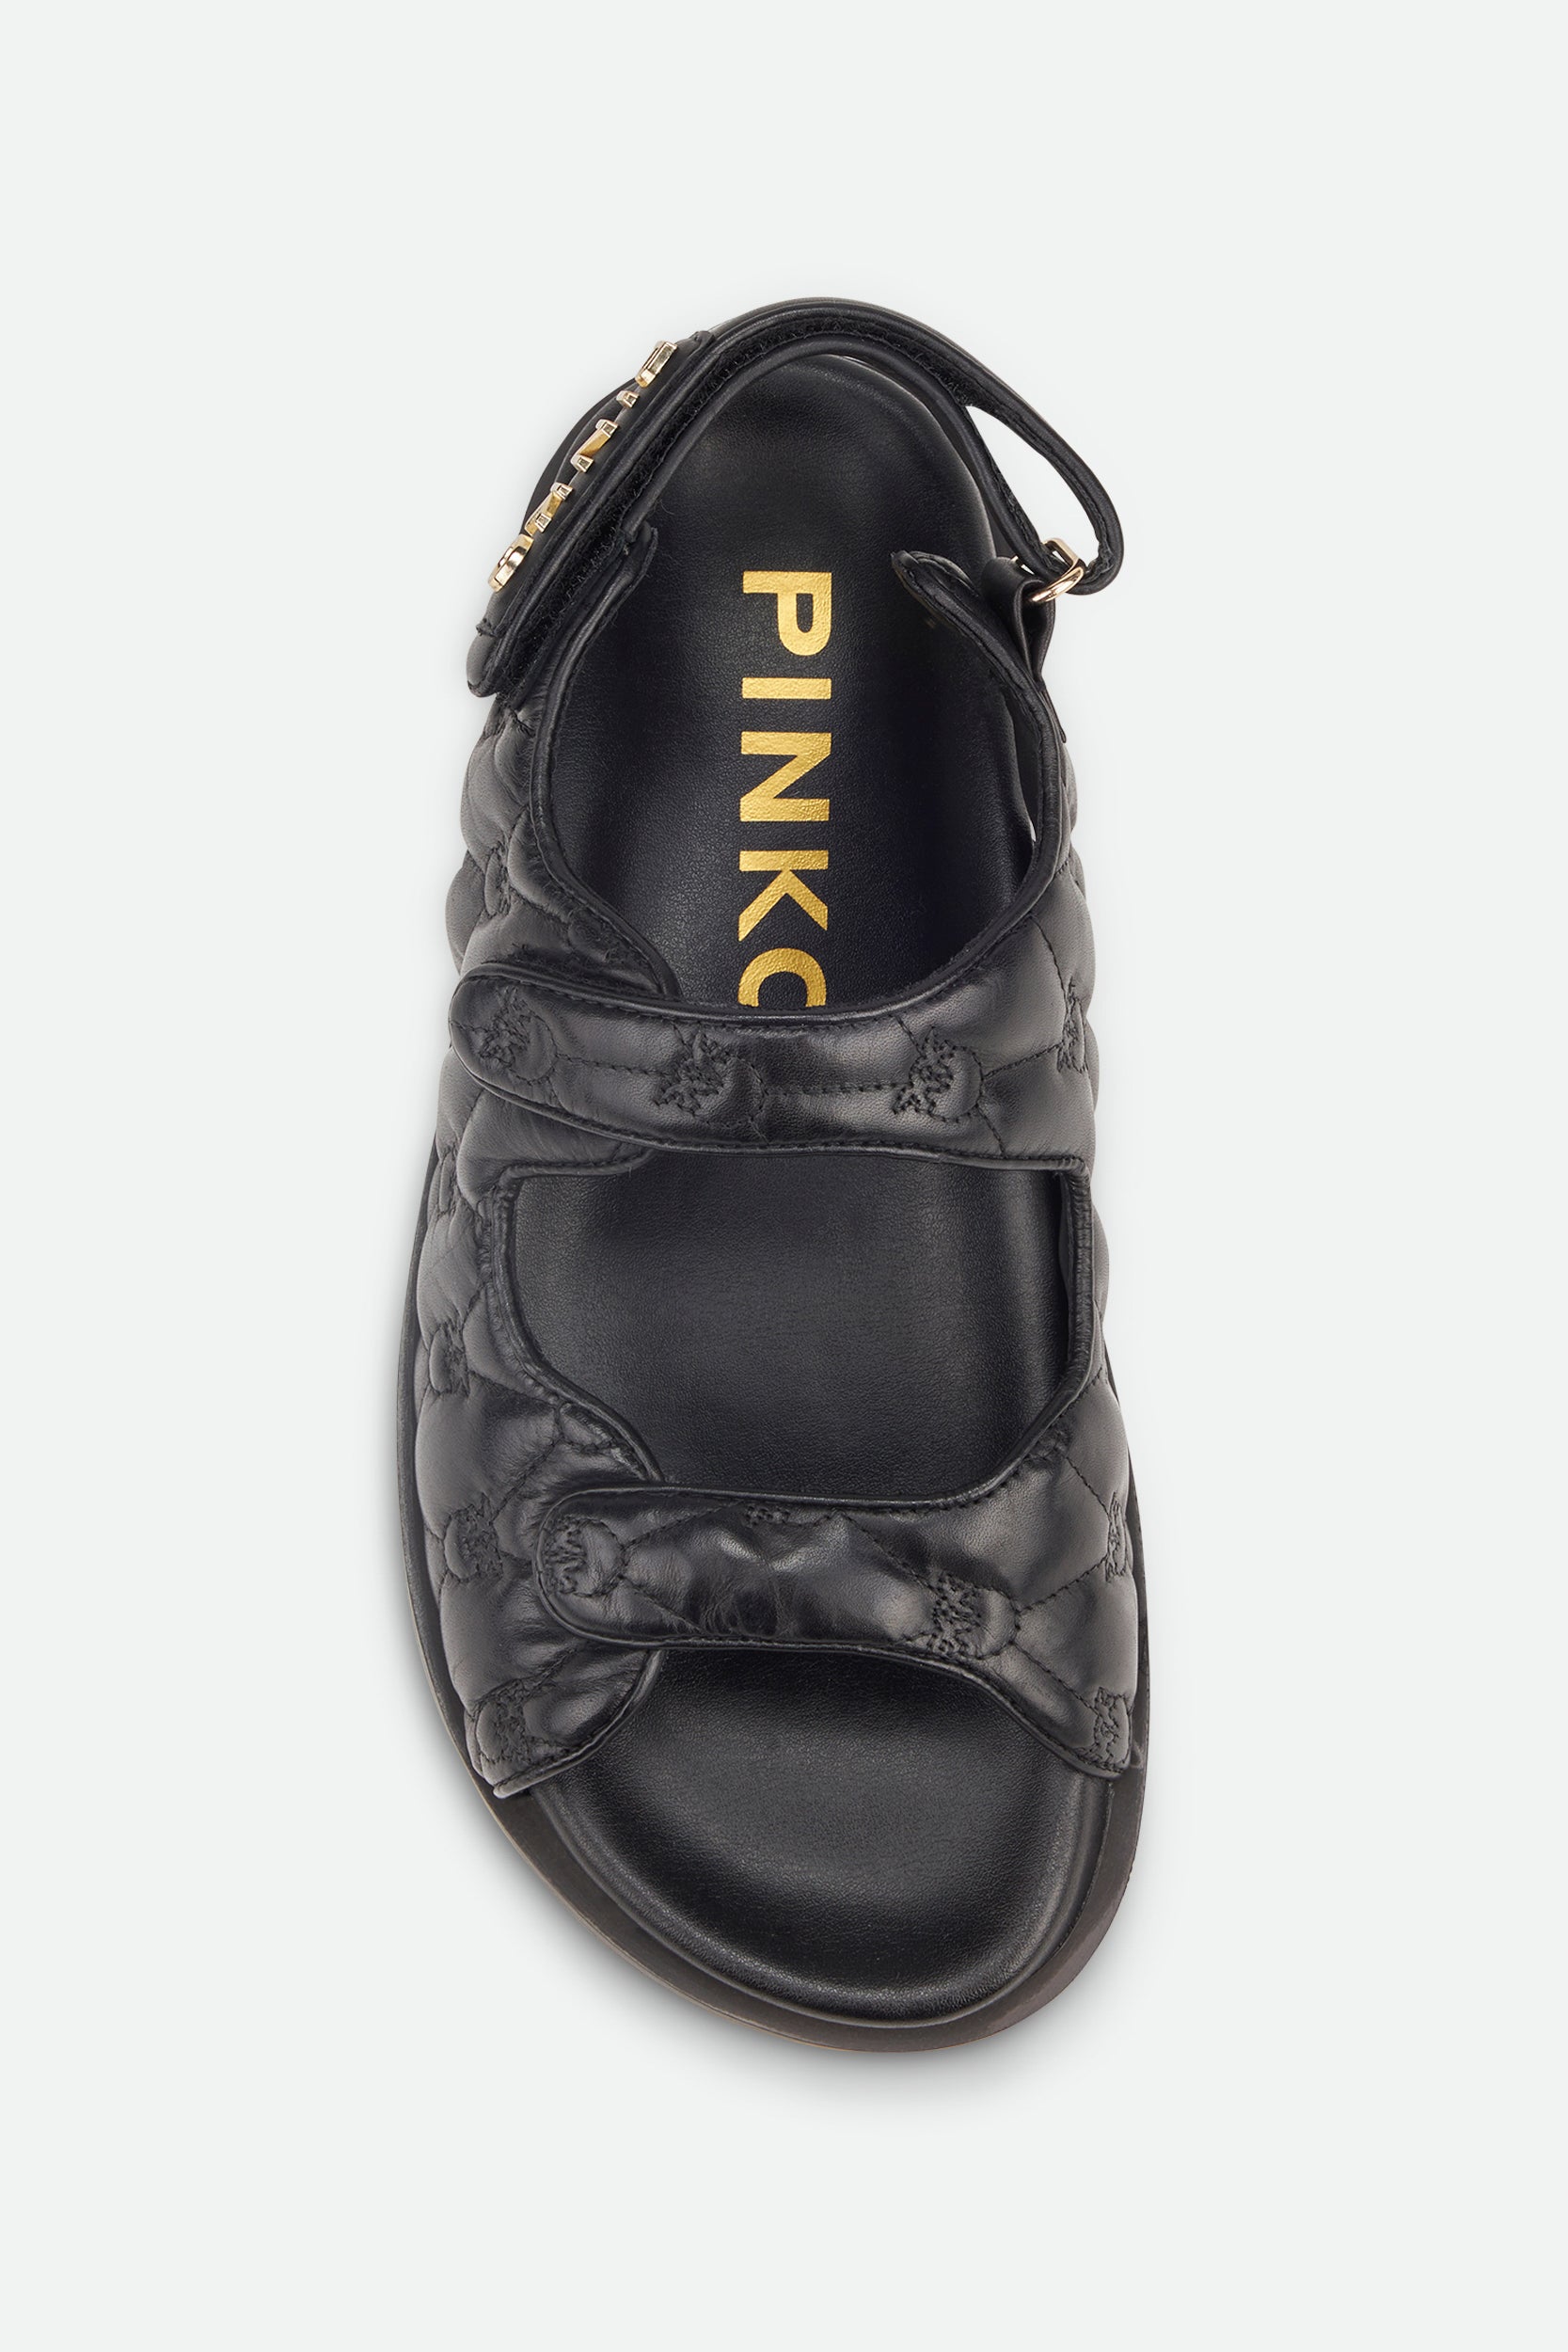 Pinko Black Leather Sandal